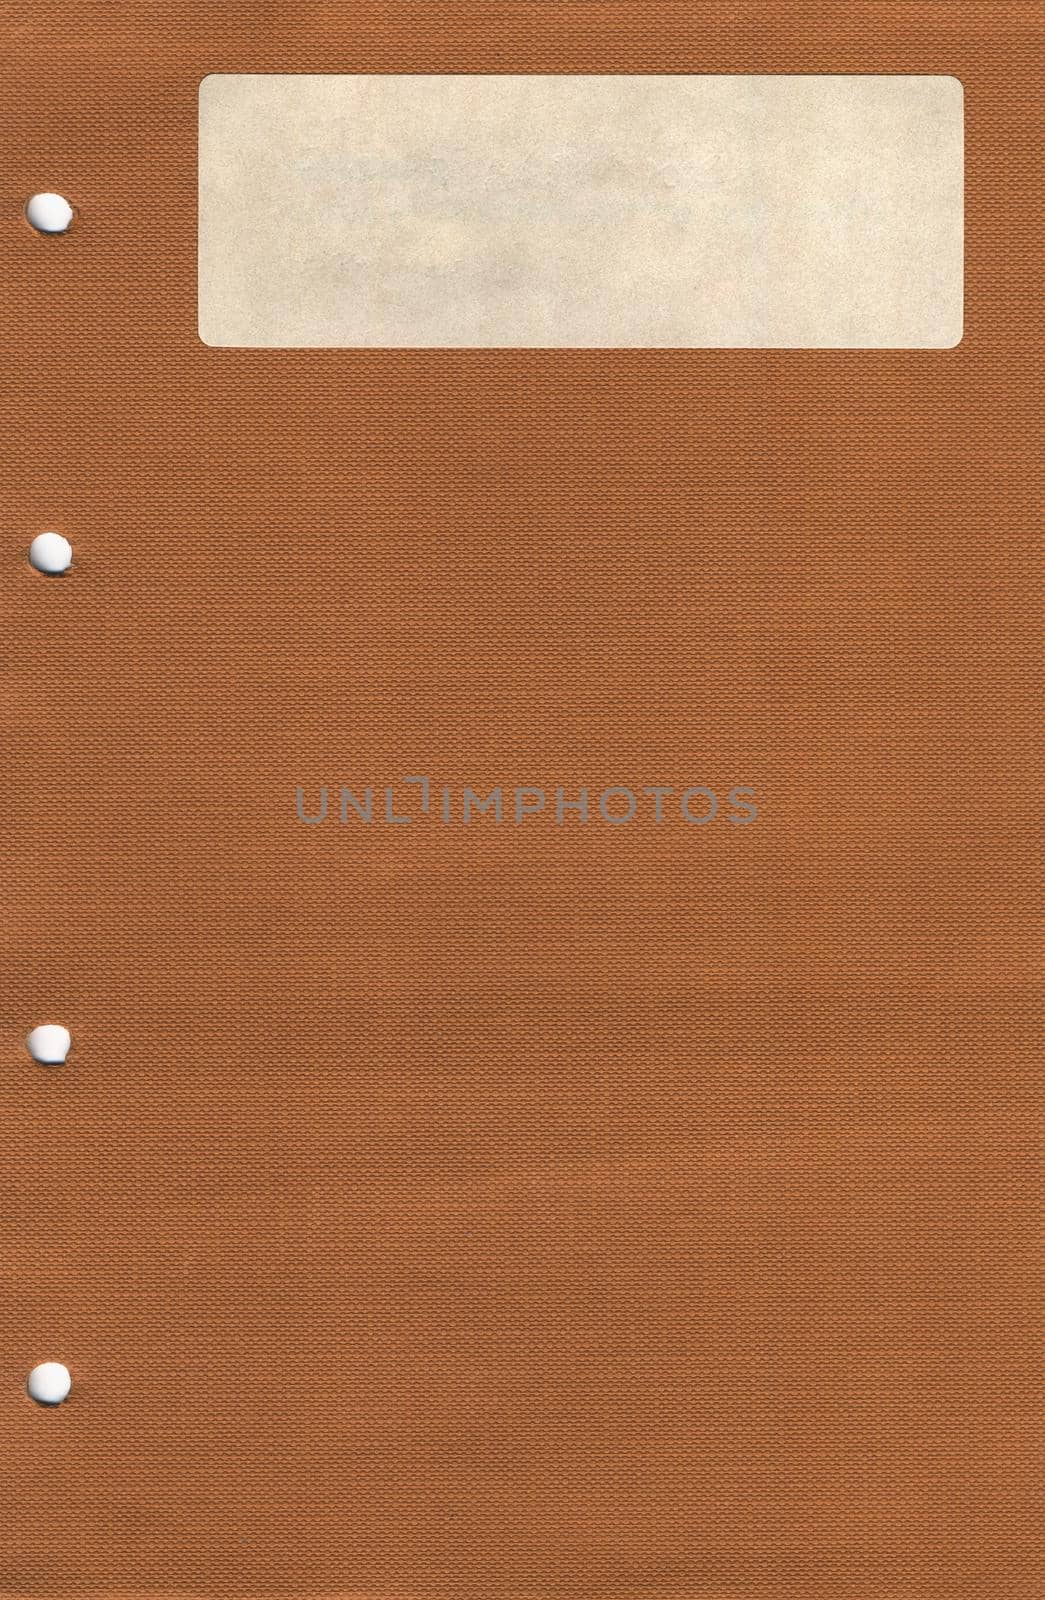 orange paper texture background by claudiodivizia